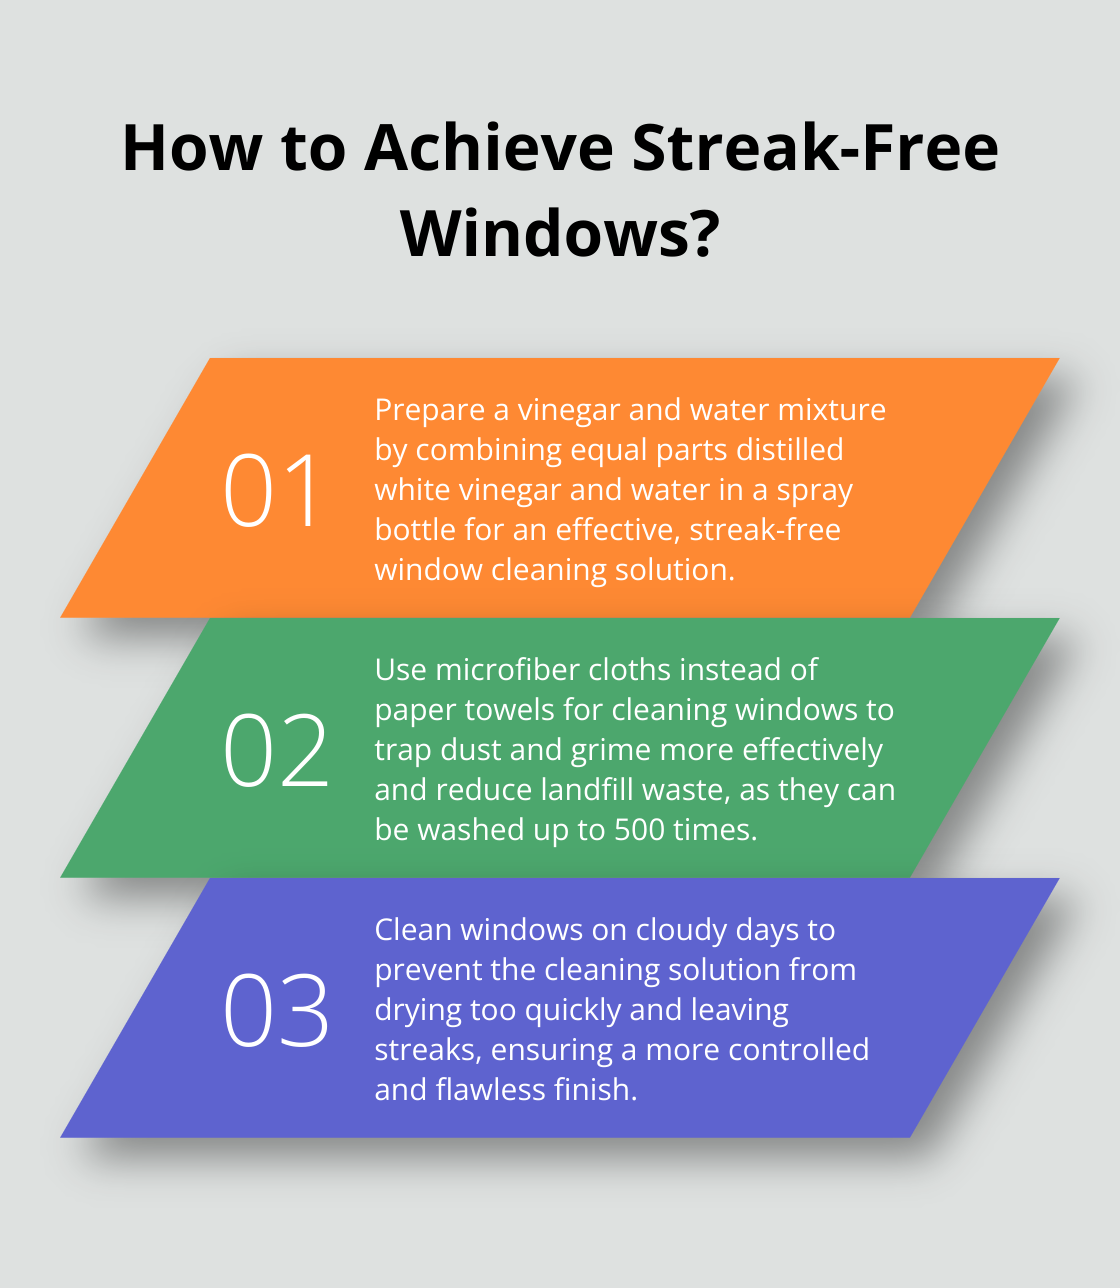 Fact - How to Achieve Streak-Free Windows?